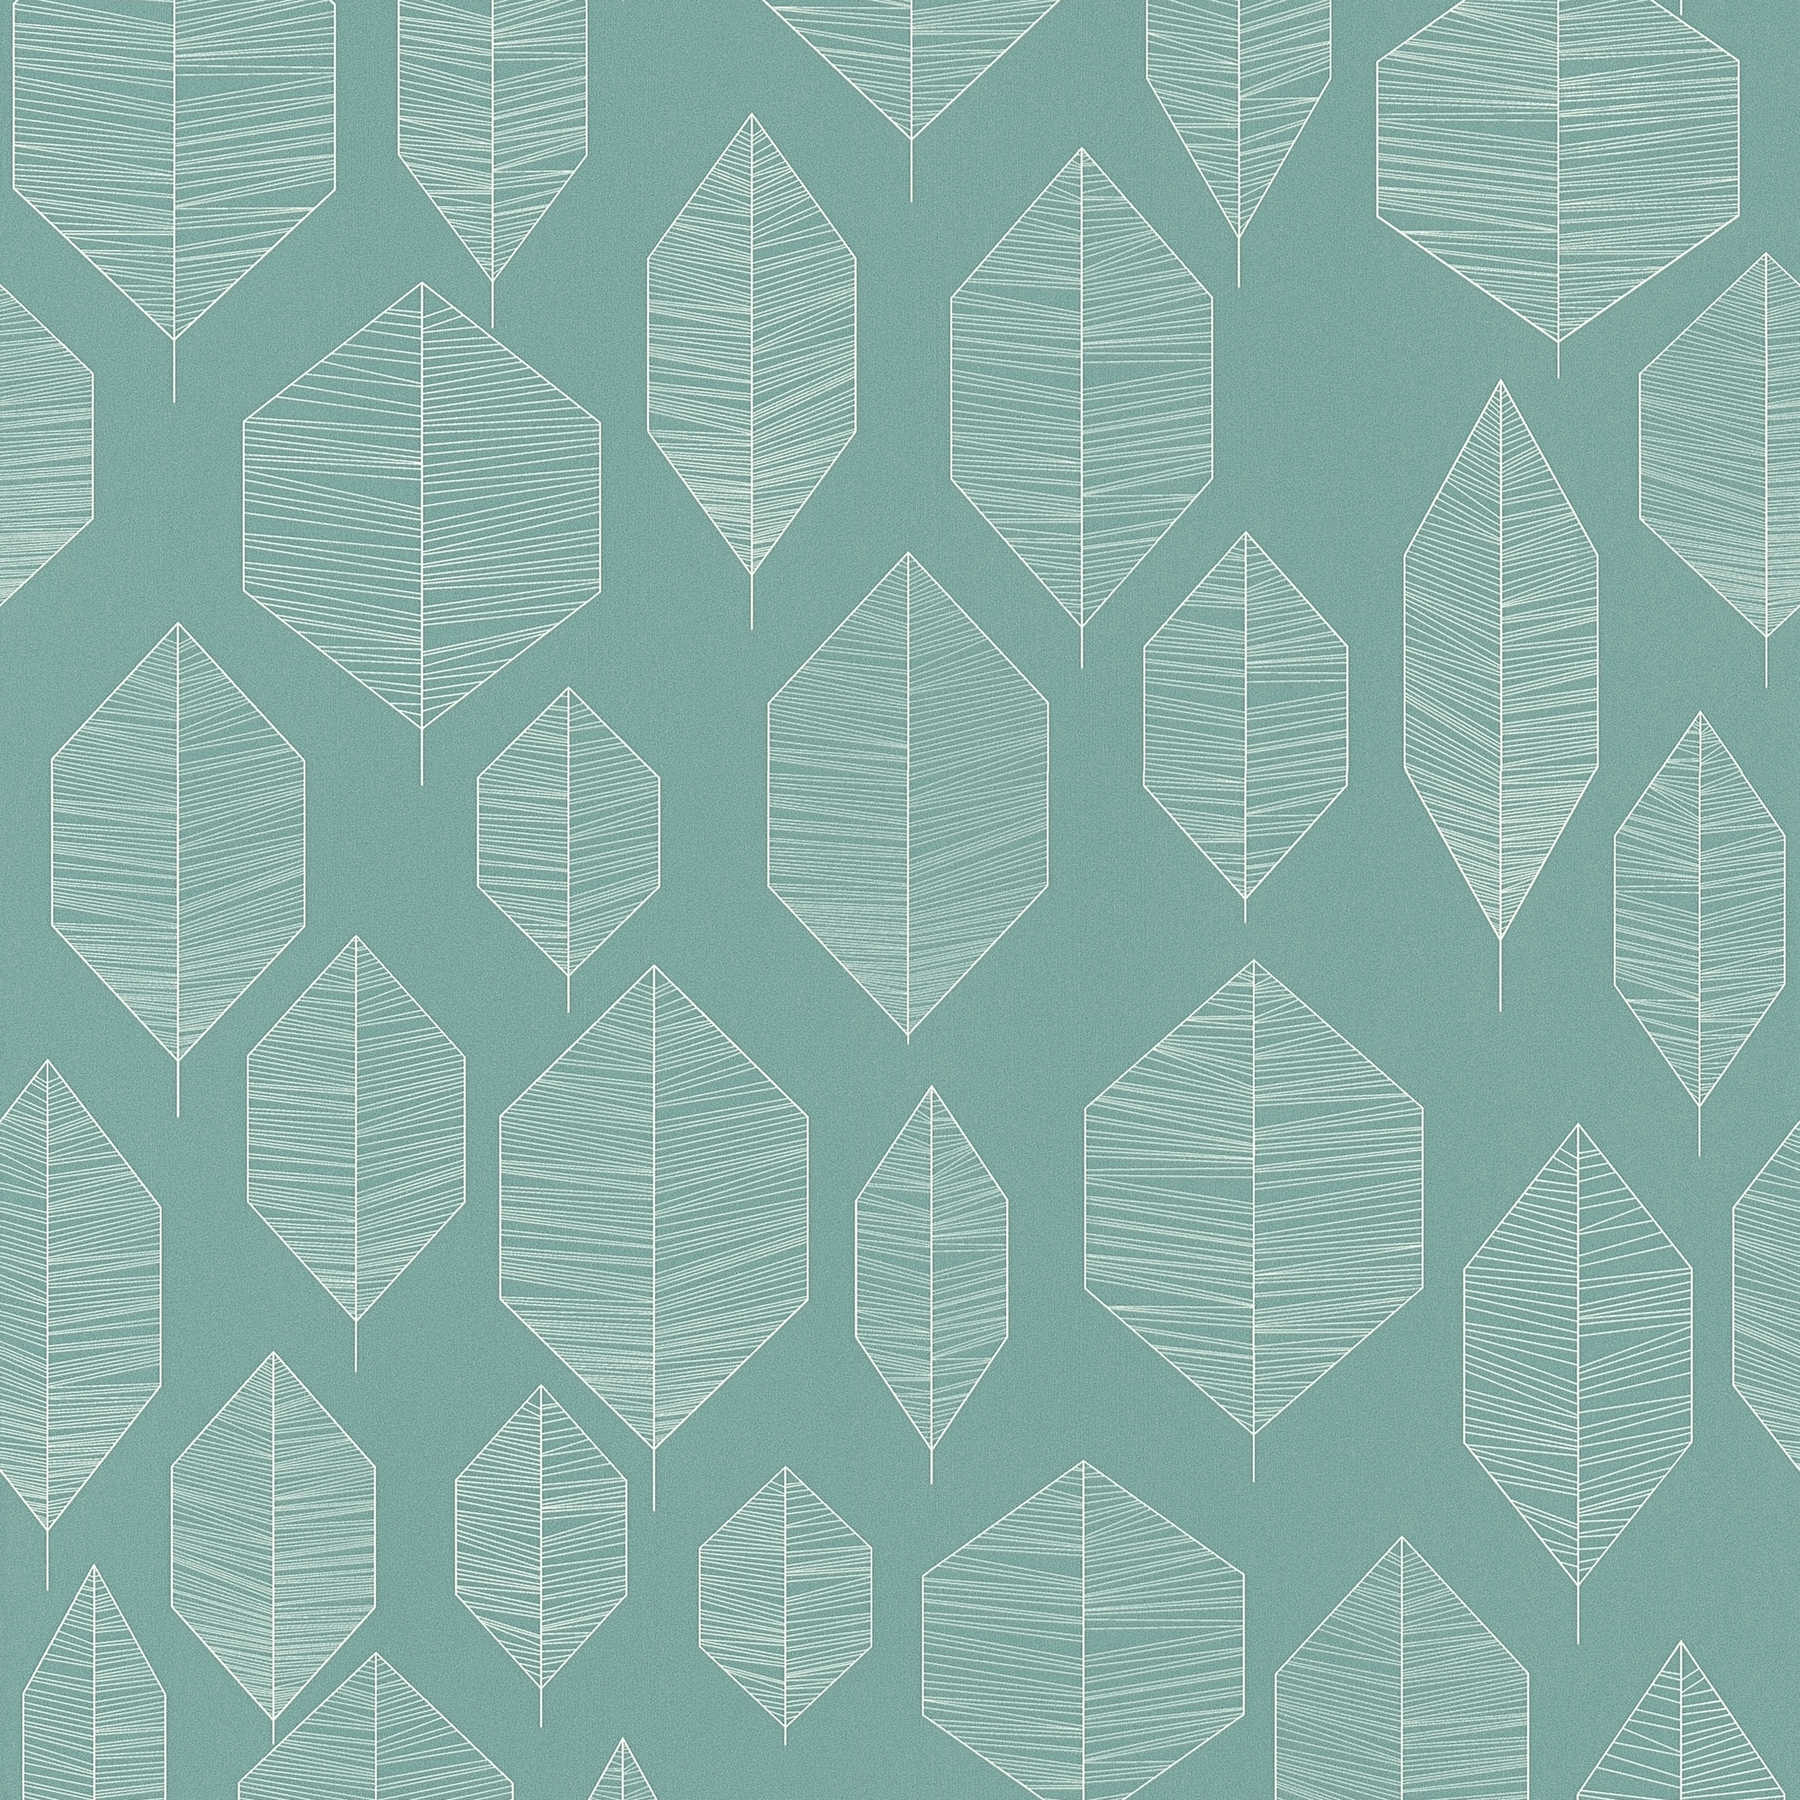 Scandinavian design wallpaper with leaves pattern - green
